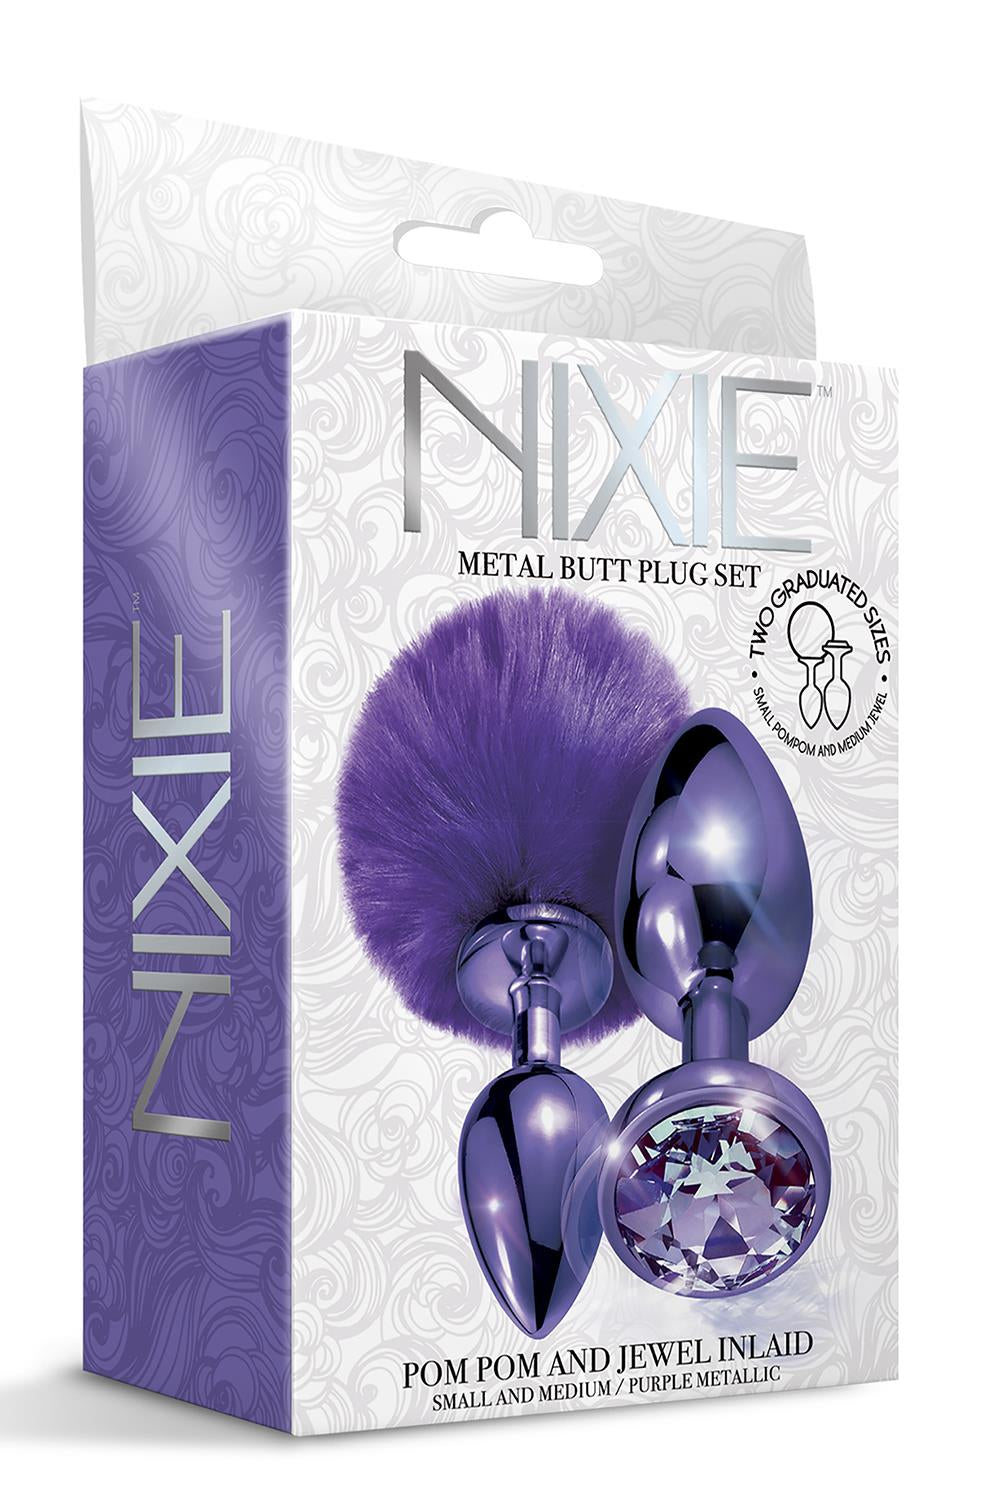 Nixie Metal Butt Plug Set Pom Pom And Jewel Inlaid Purple Metallic